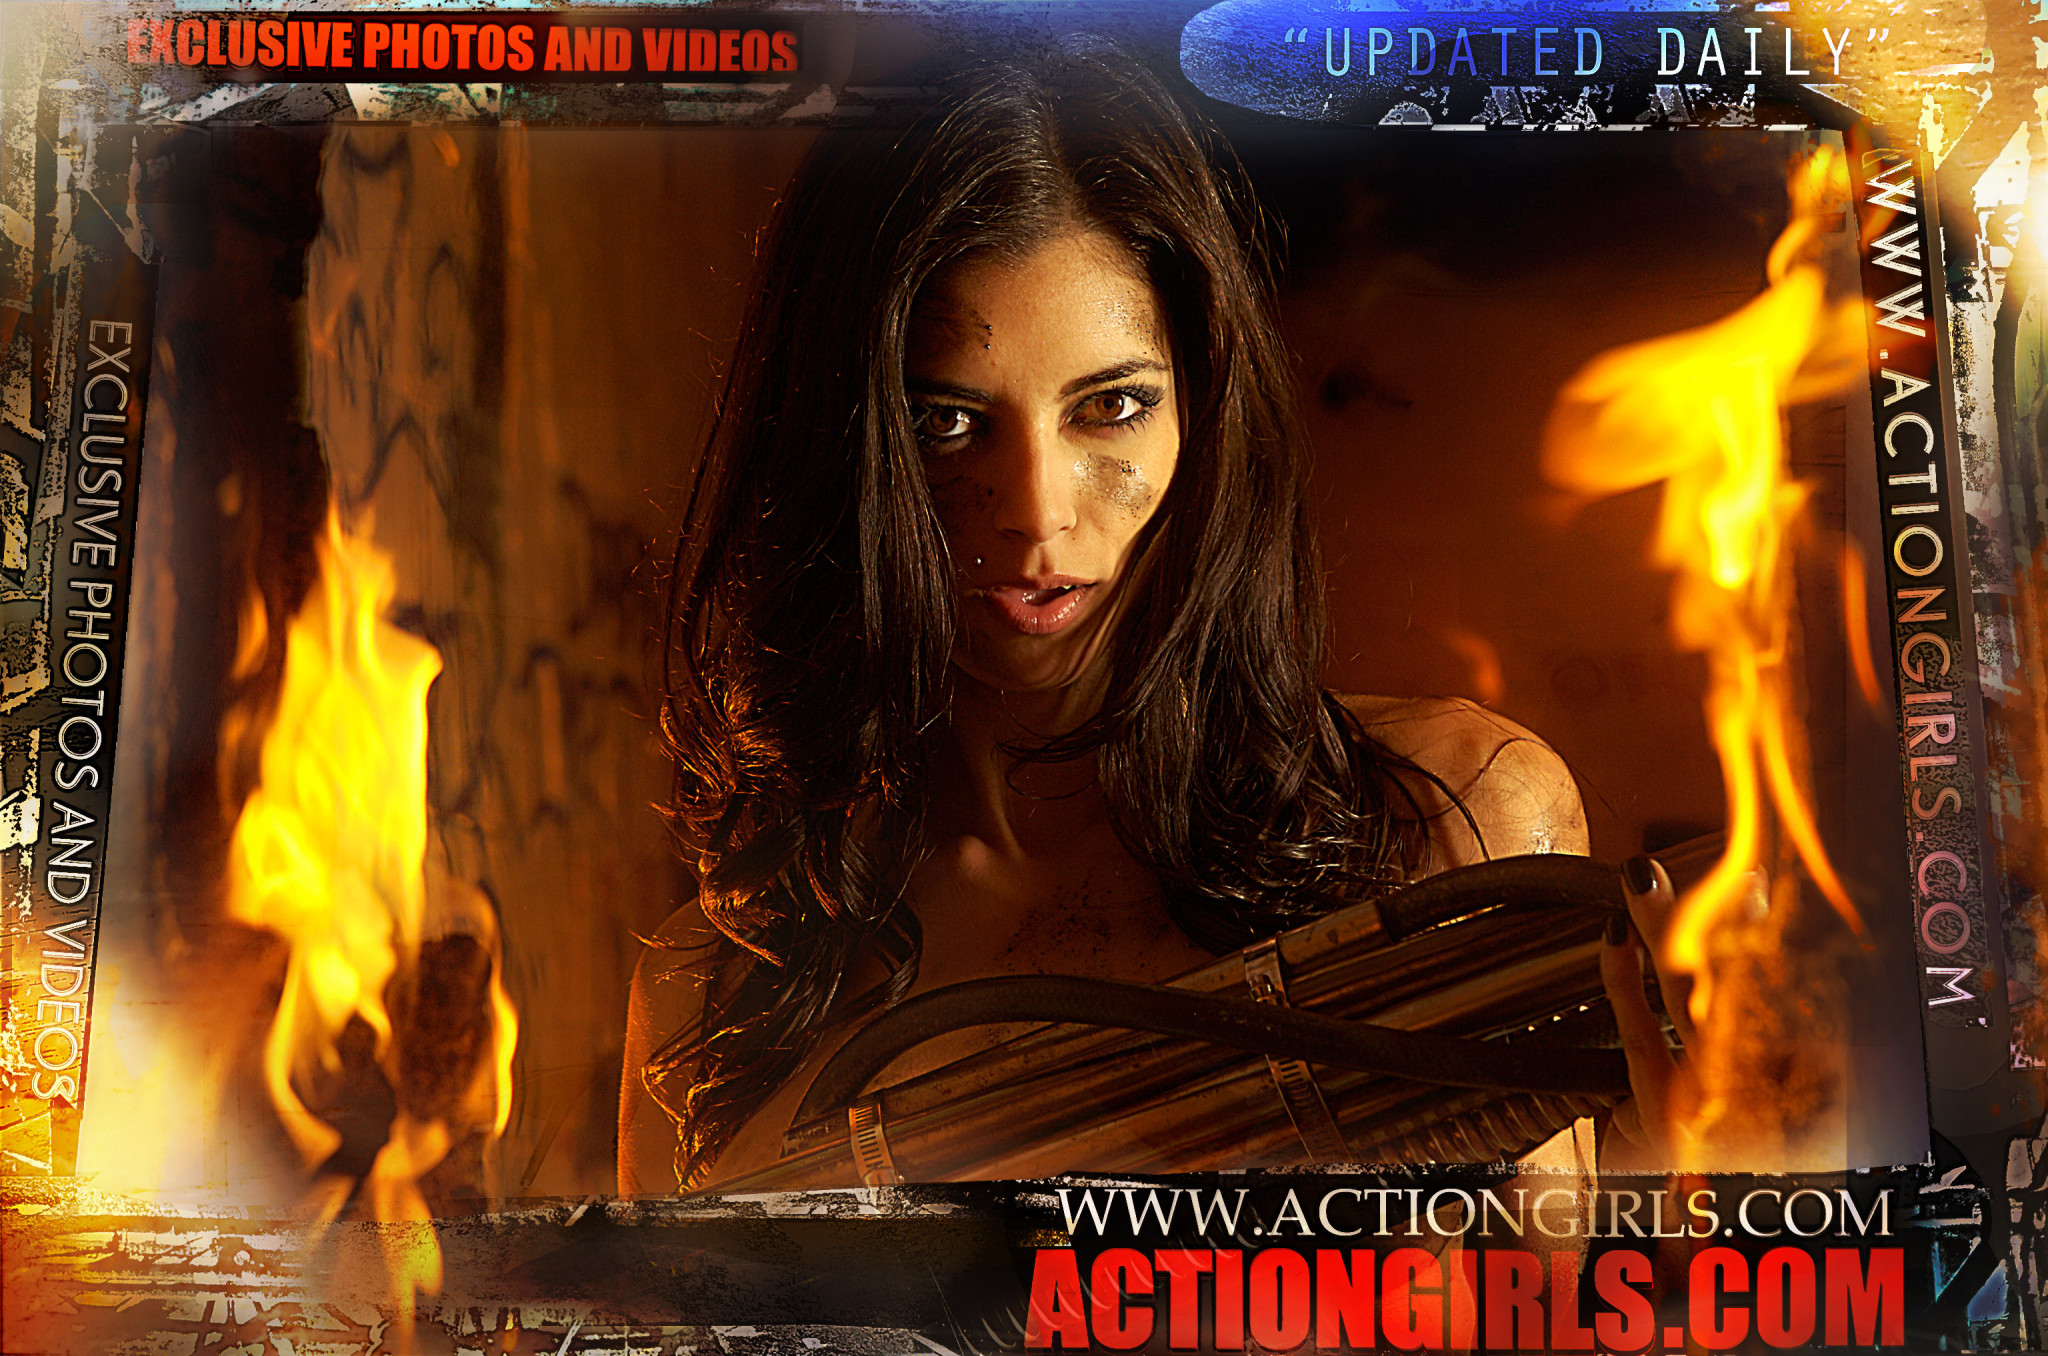 Exclusivo actiongirls web posters deluxe ser 5 fotos actiongirl
 #70962400